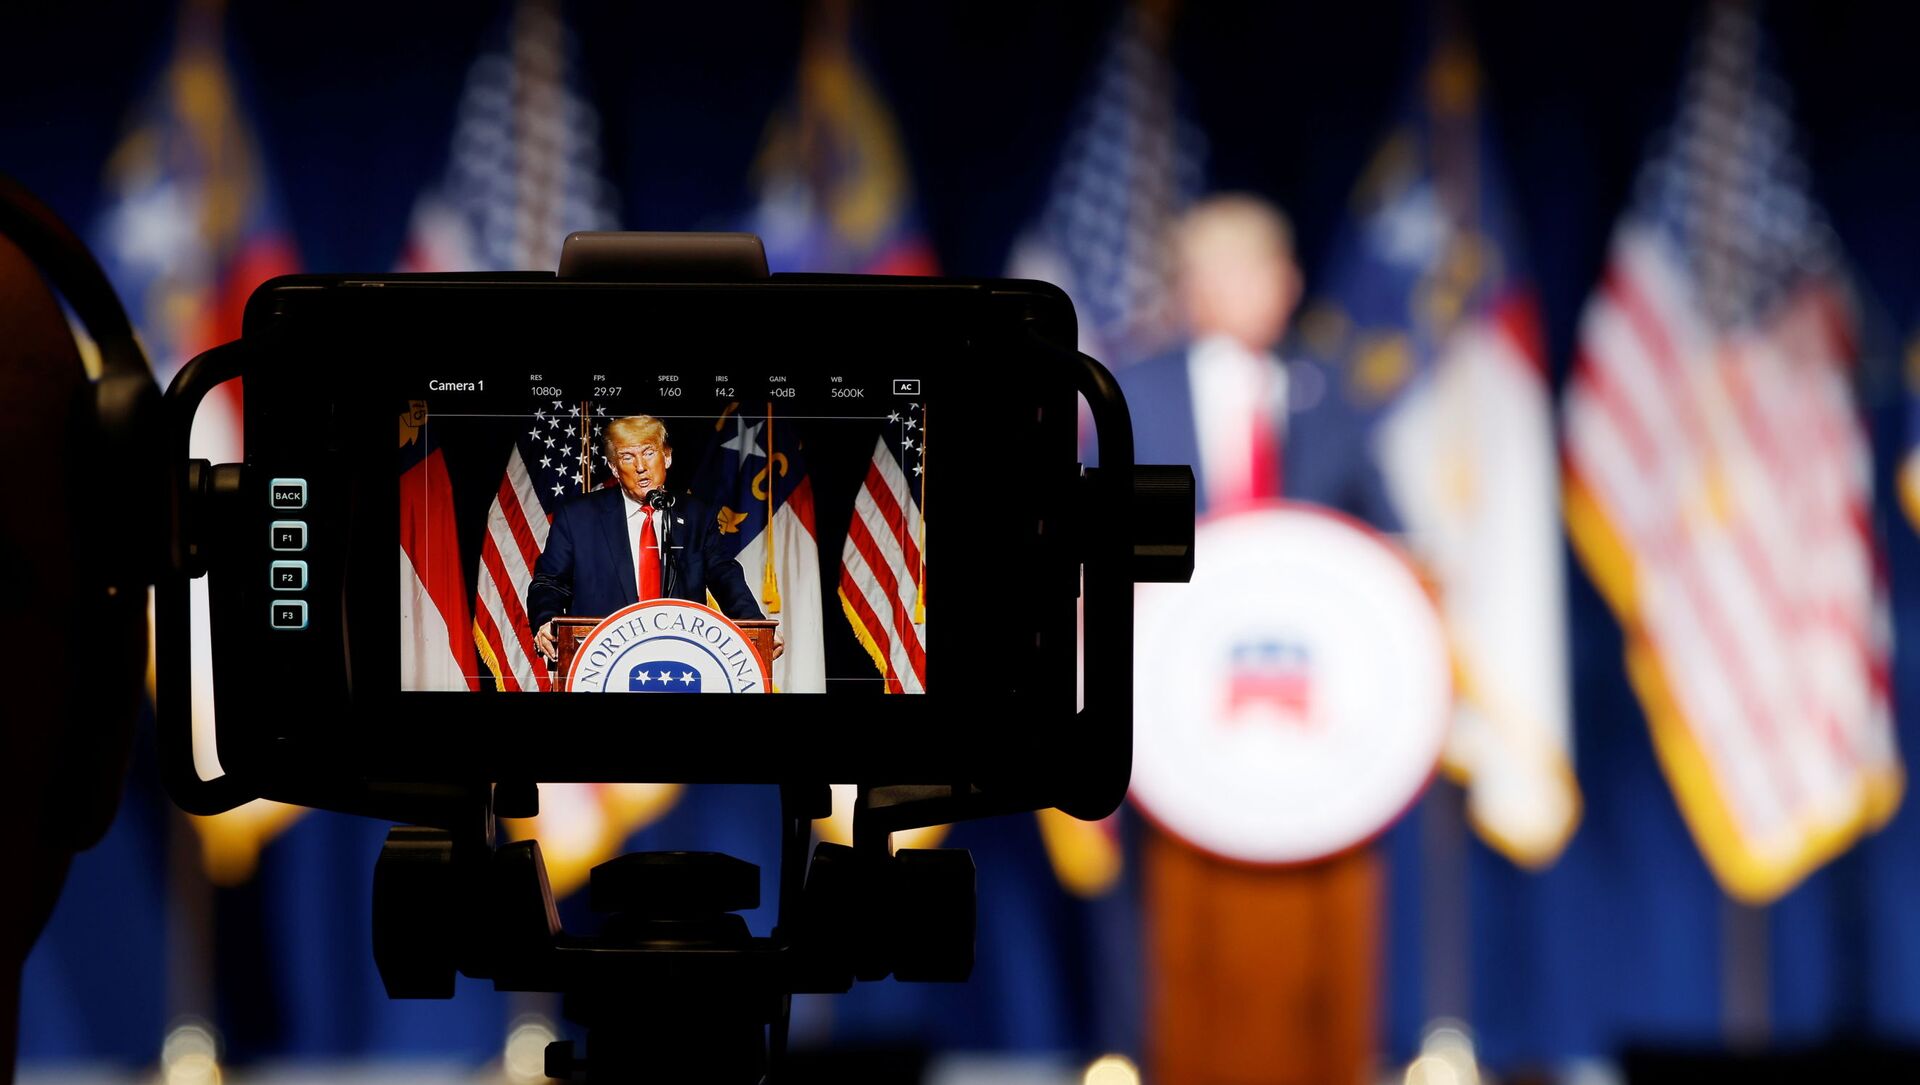 Former U.S. President Donald Trump is seen in a live television monitor as he speaks at the North Carolina GOP convention dinner in Greenville, North Carolina, U.S. June 5, 2021 - Sputnik International, 1920, 29.06.2021